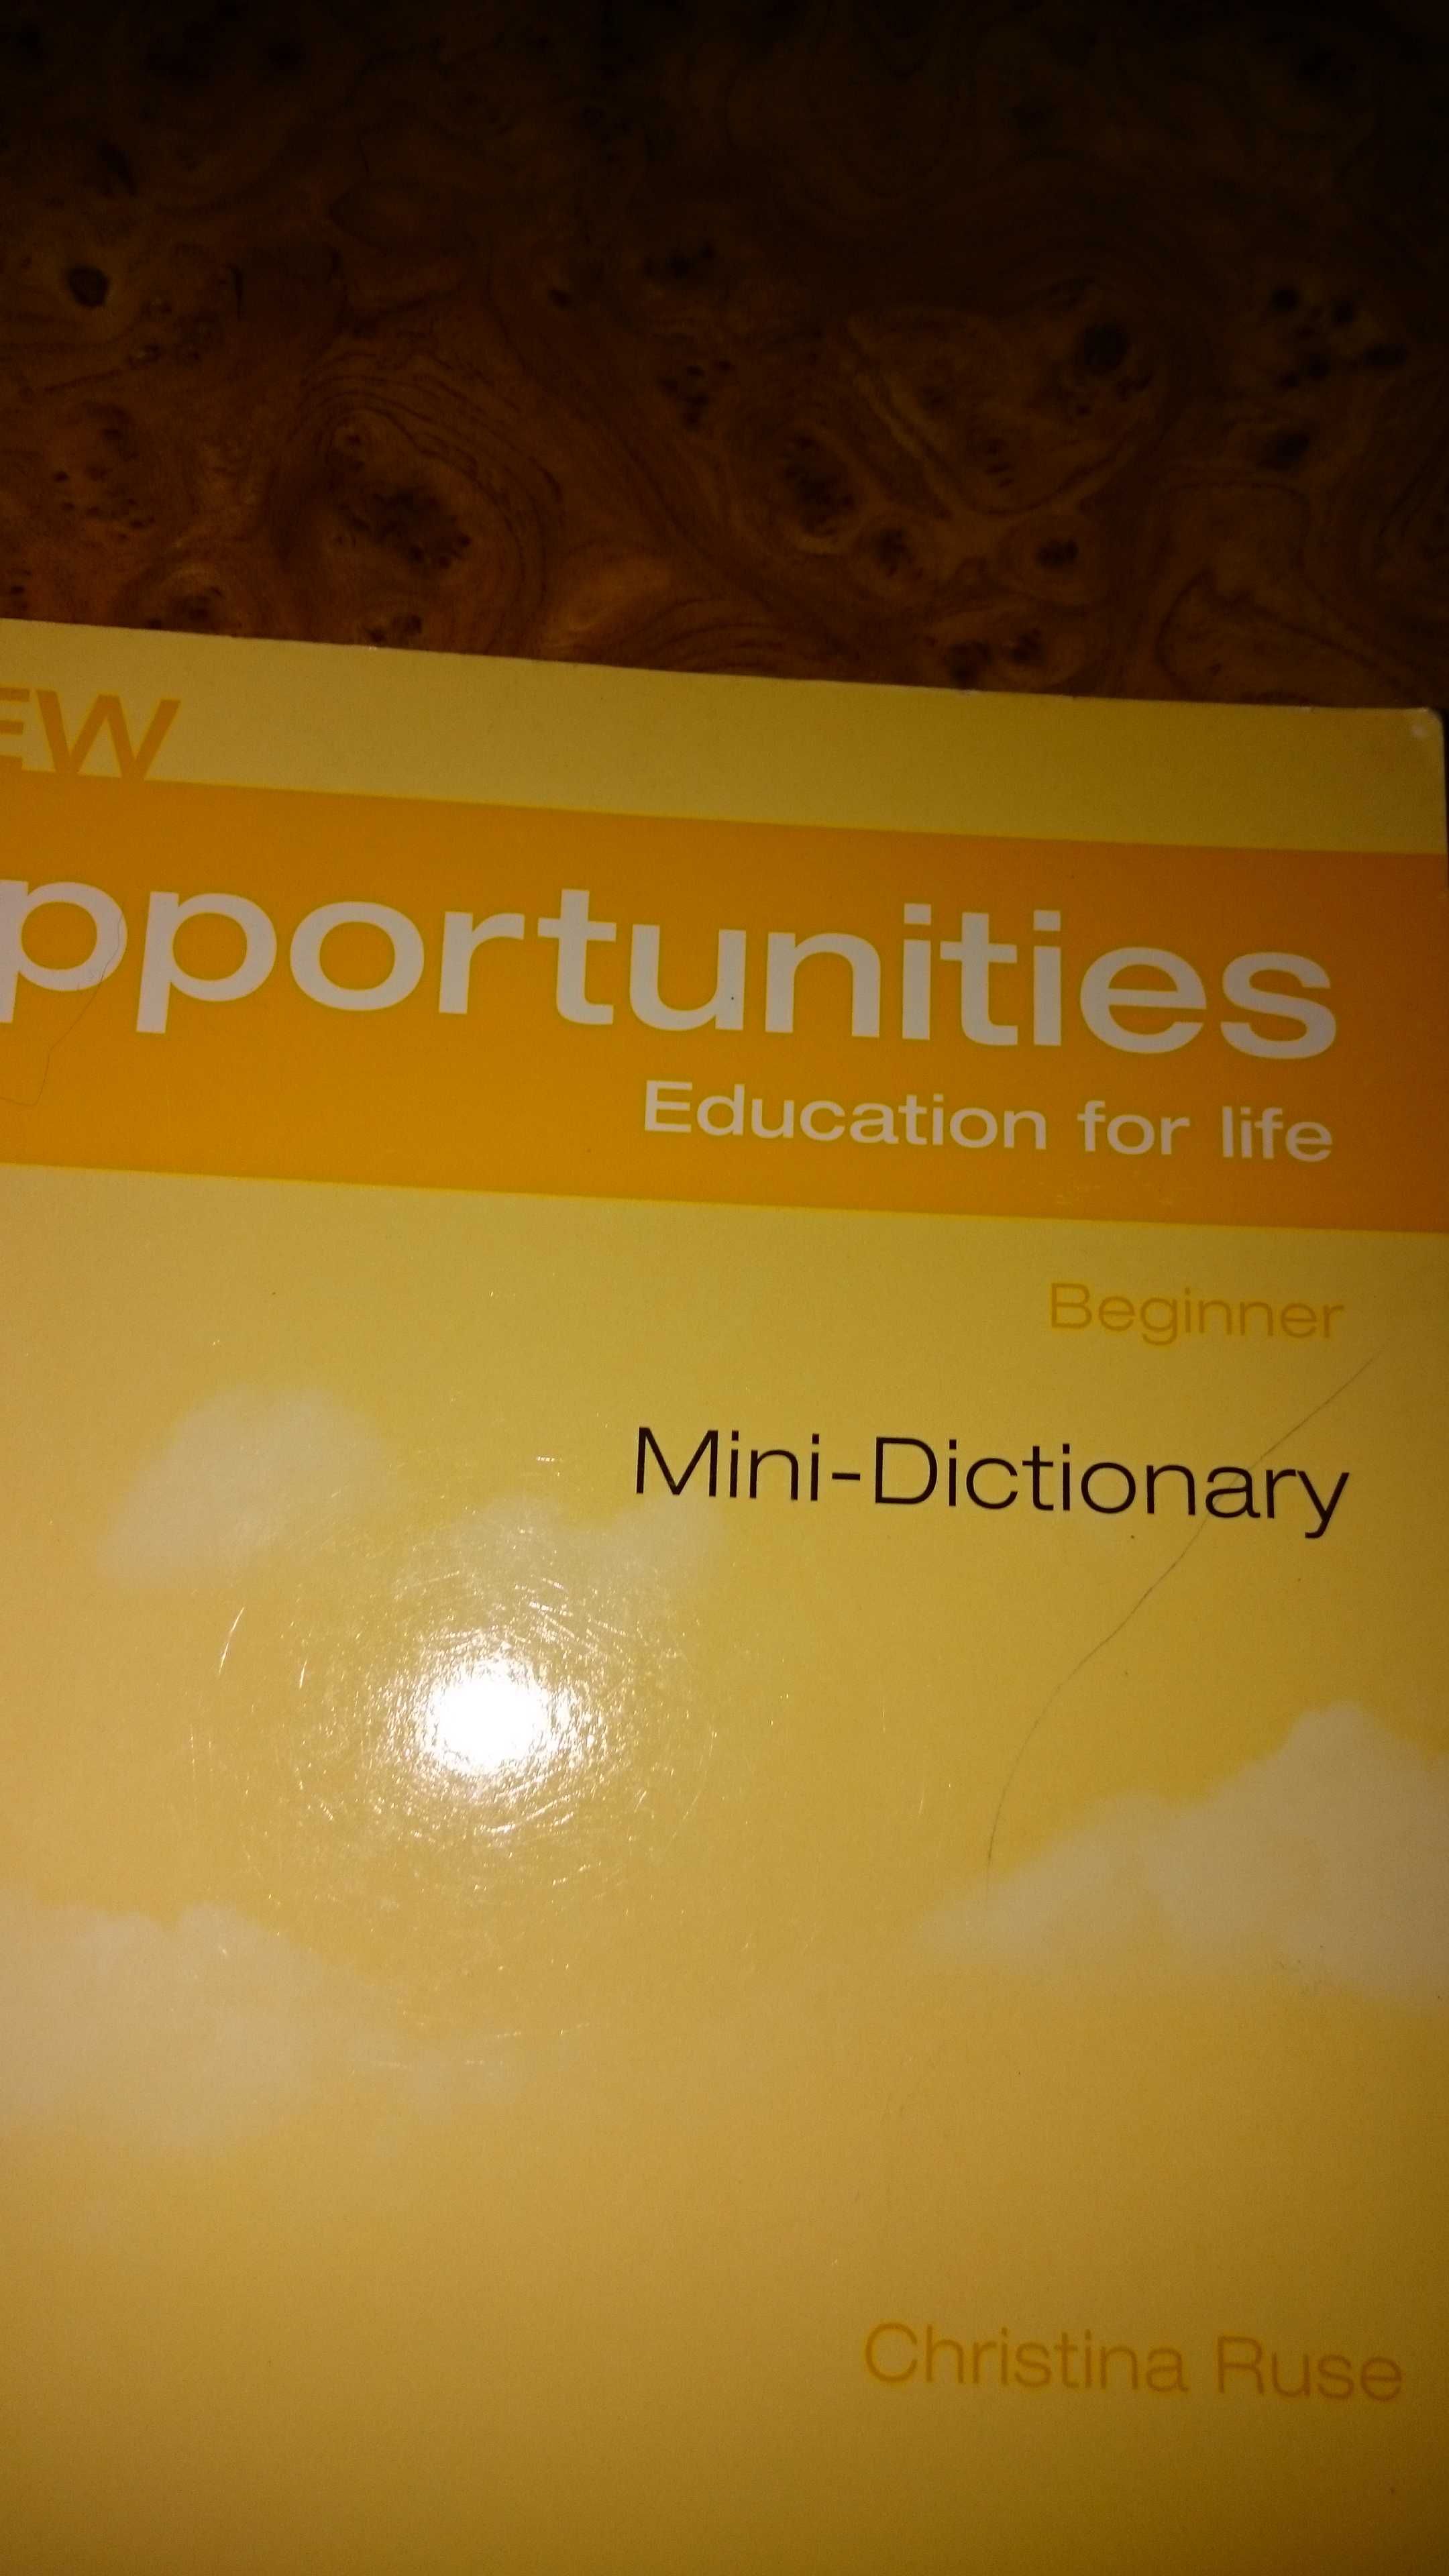 Учебник по английскому "New Opportunities: Education for Life"